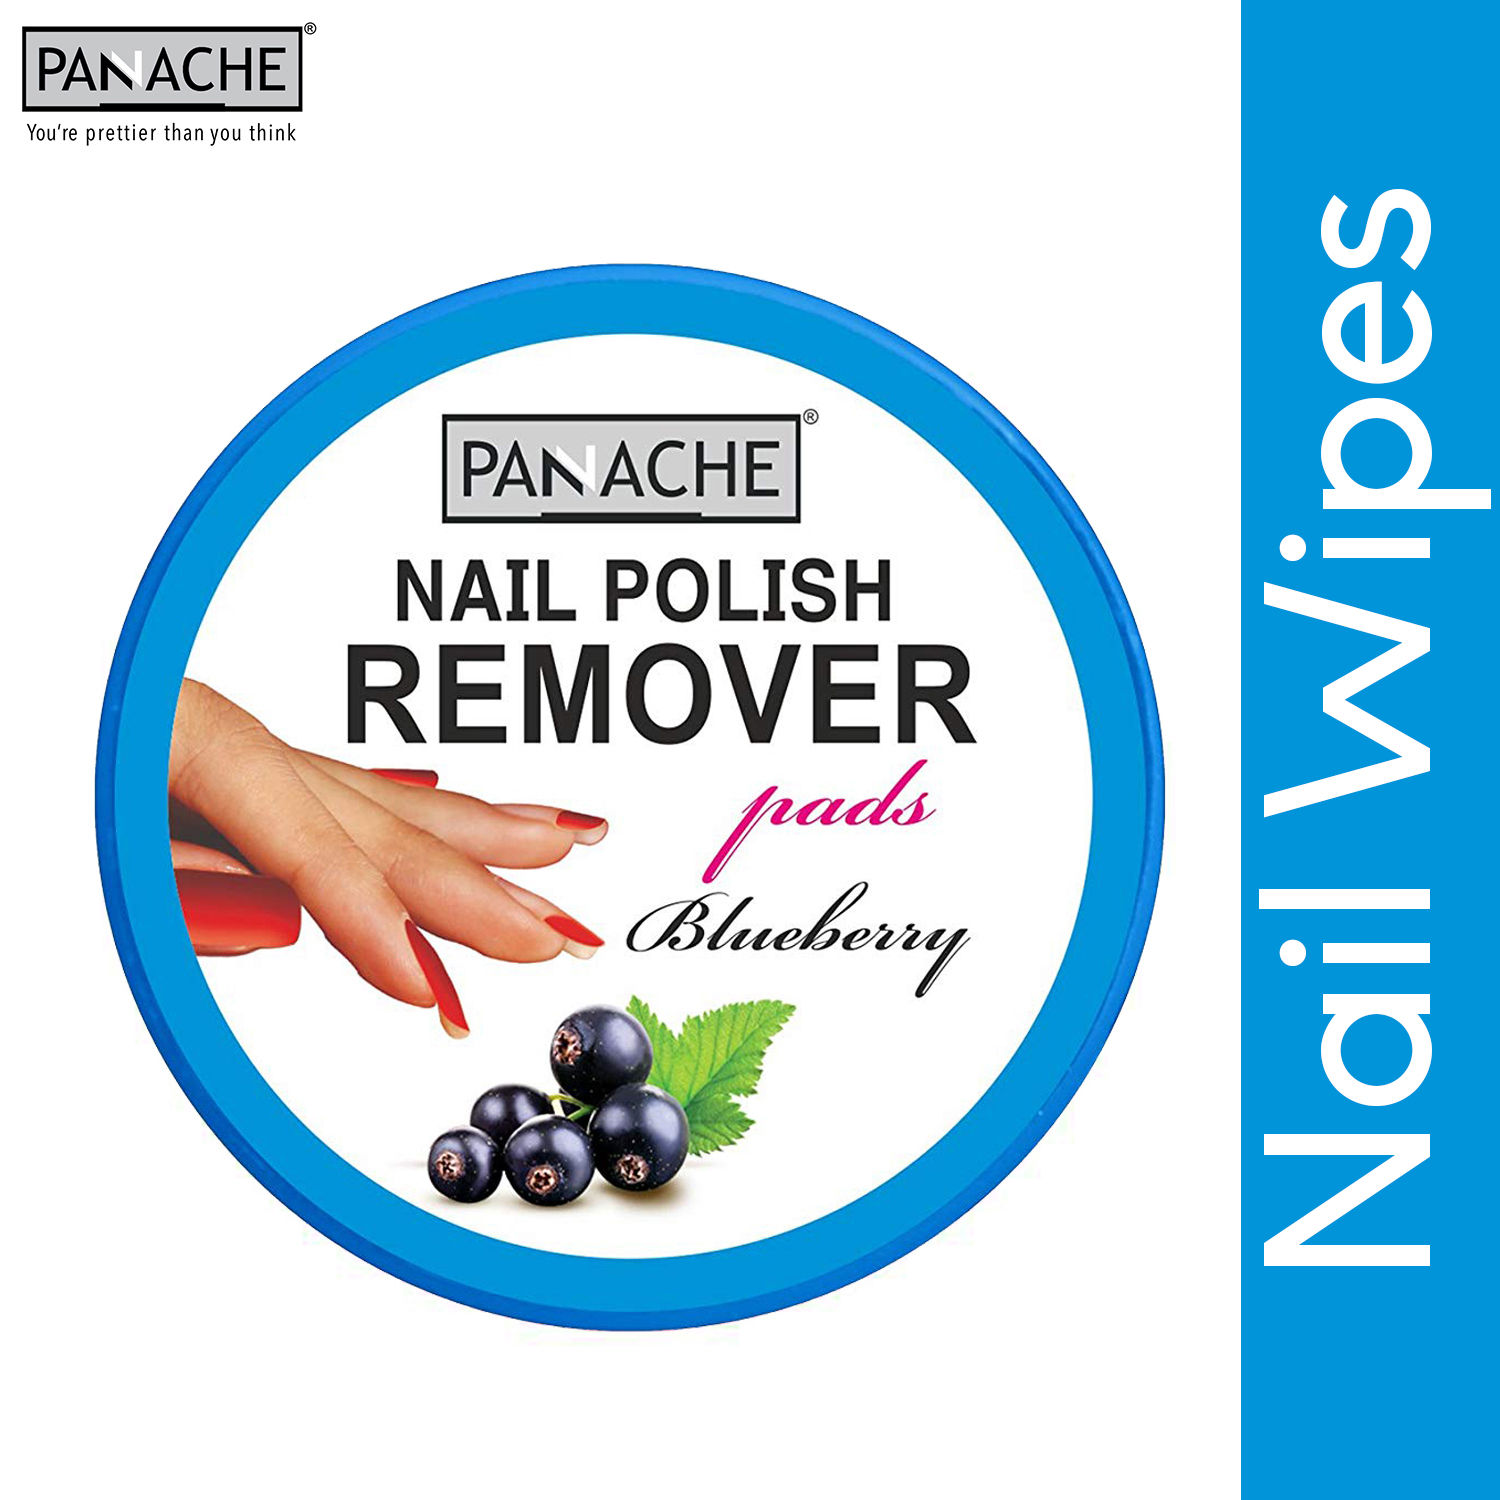 Panache Nail Polish Remover Pads - Blueberry